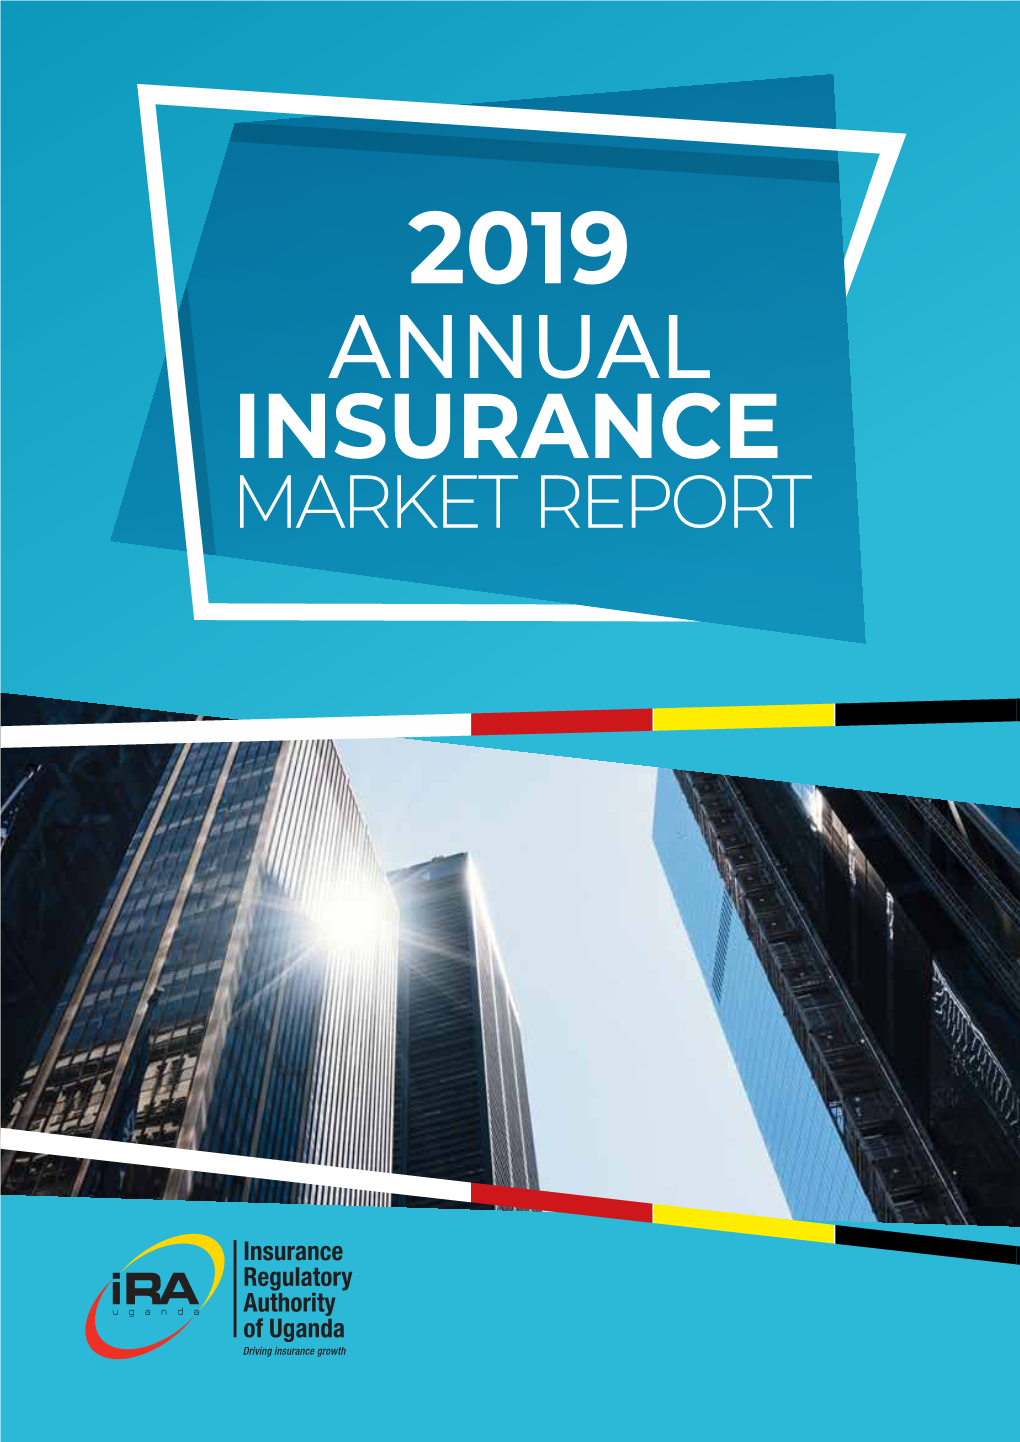 Insurance Regulatory Authority of Uganda Regulatory I Authority Annual Insurance Market Report 2019 of Uganda